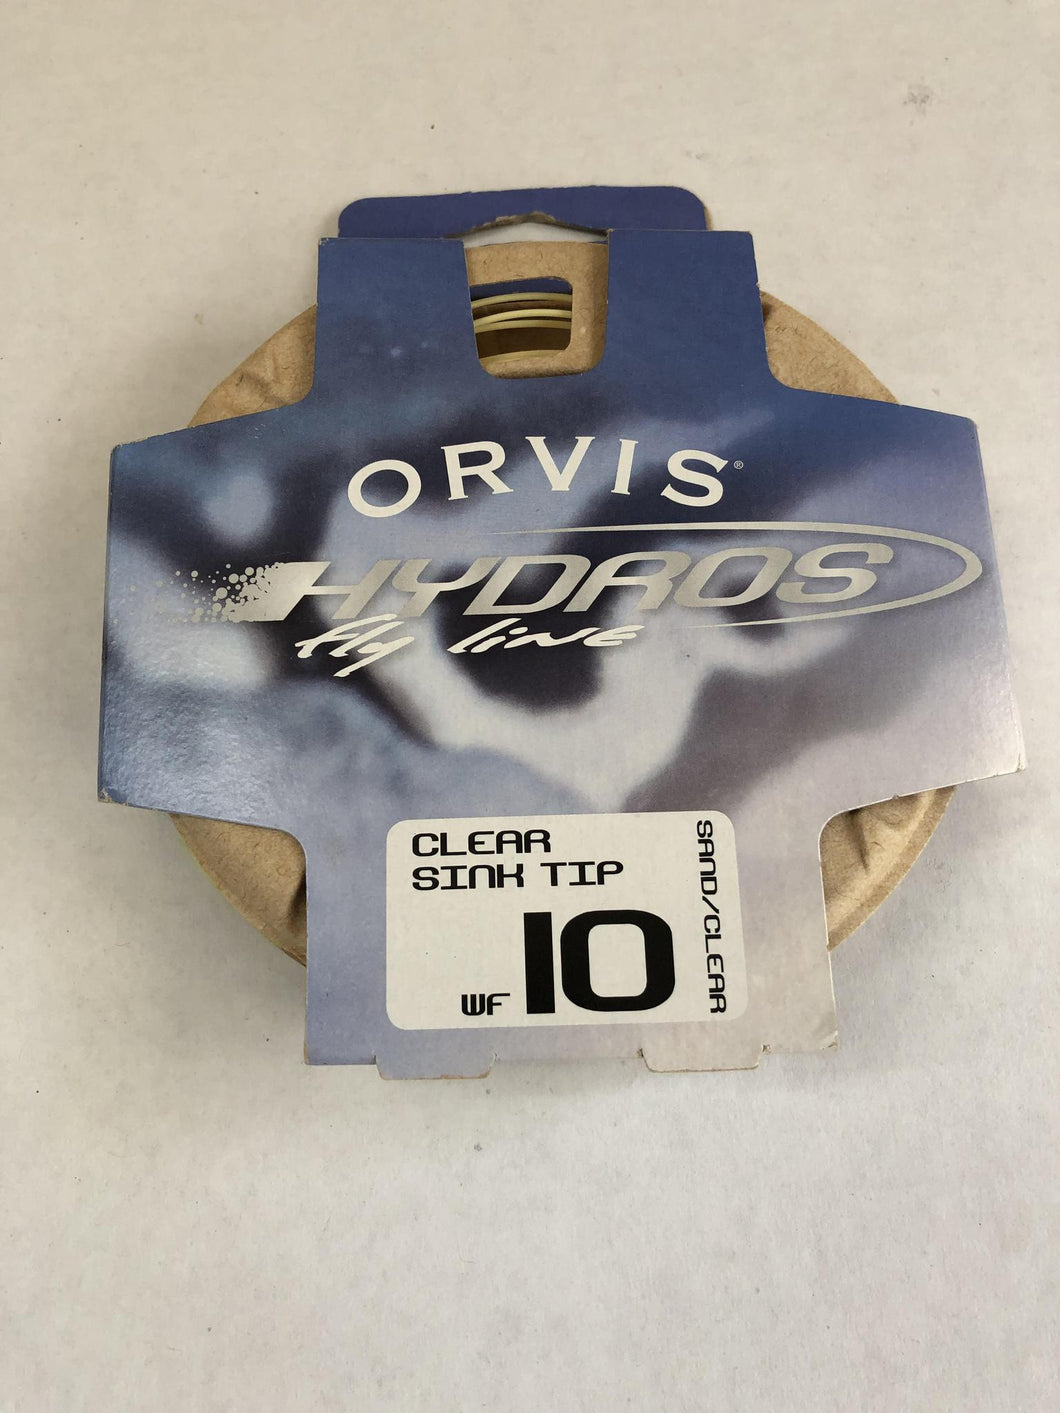 Orvis Hydros Sink Tip Clear WF 10 Sand/Clear